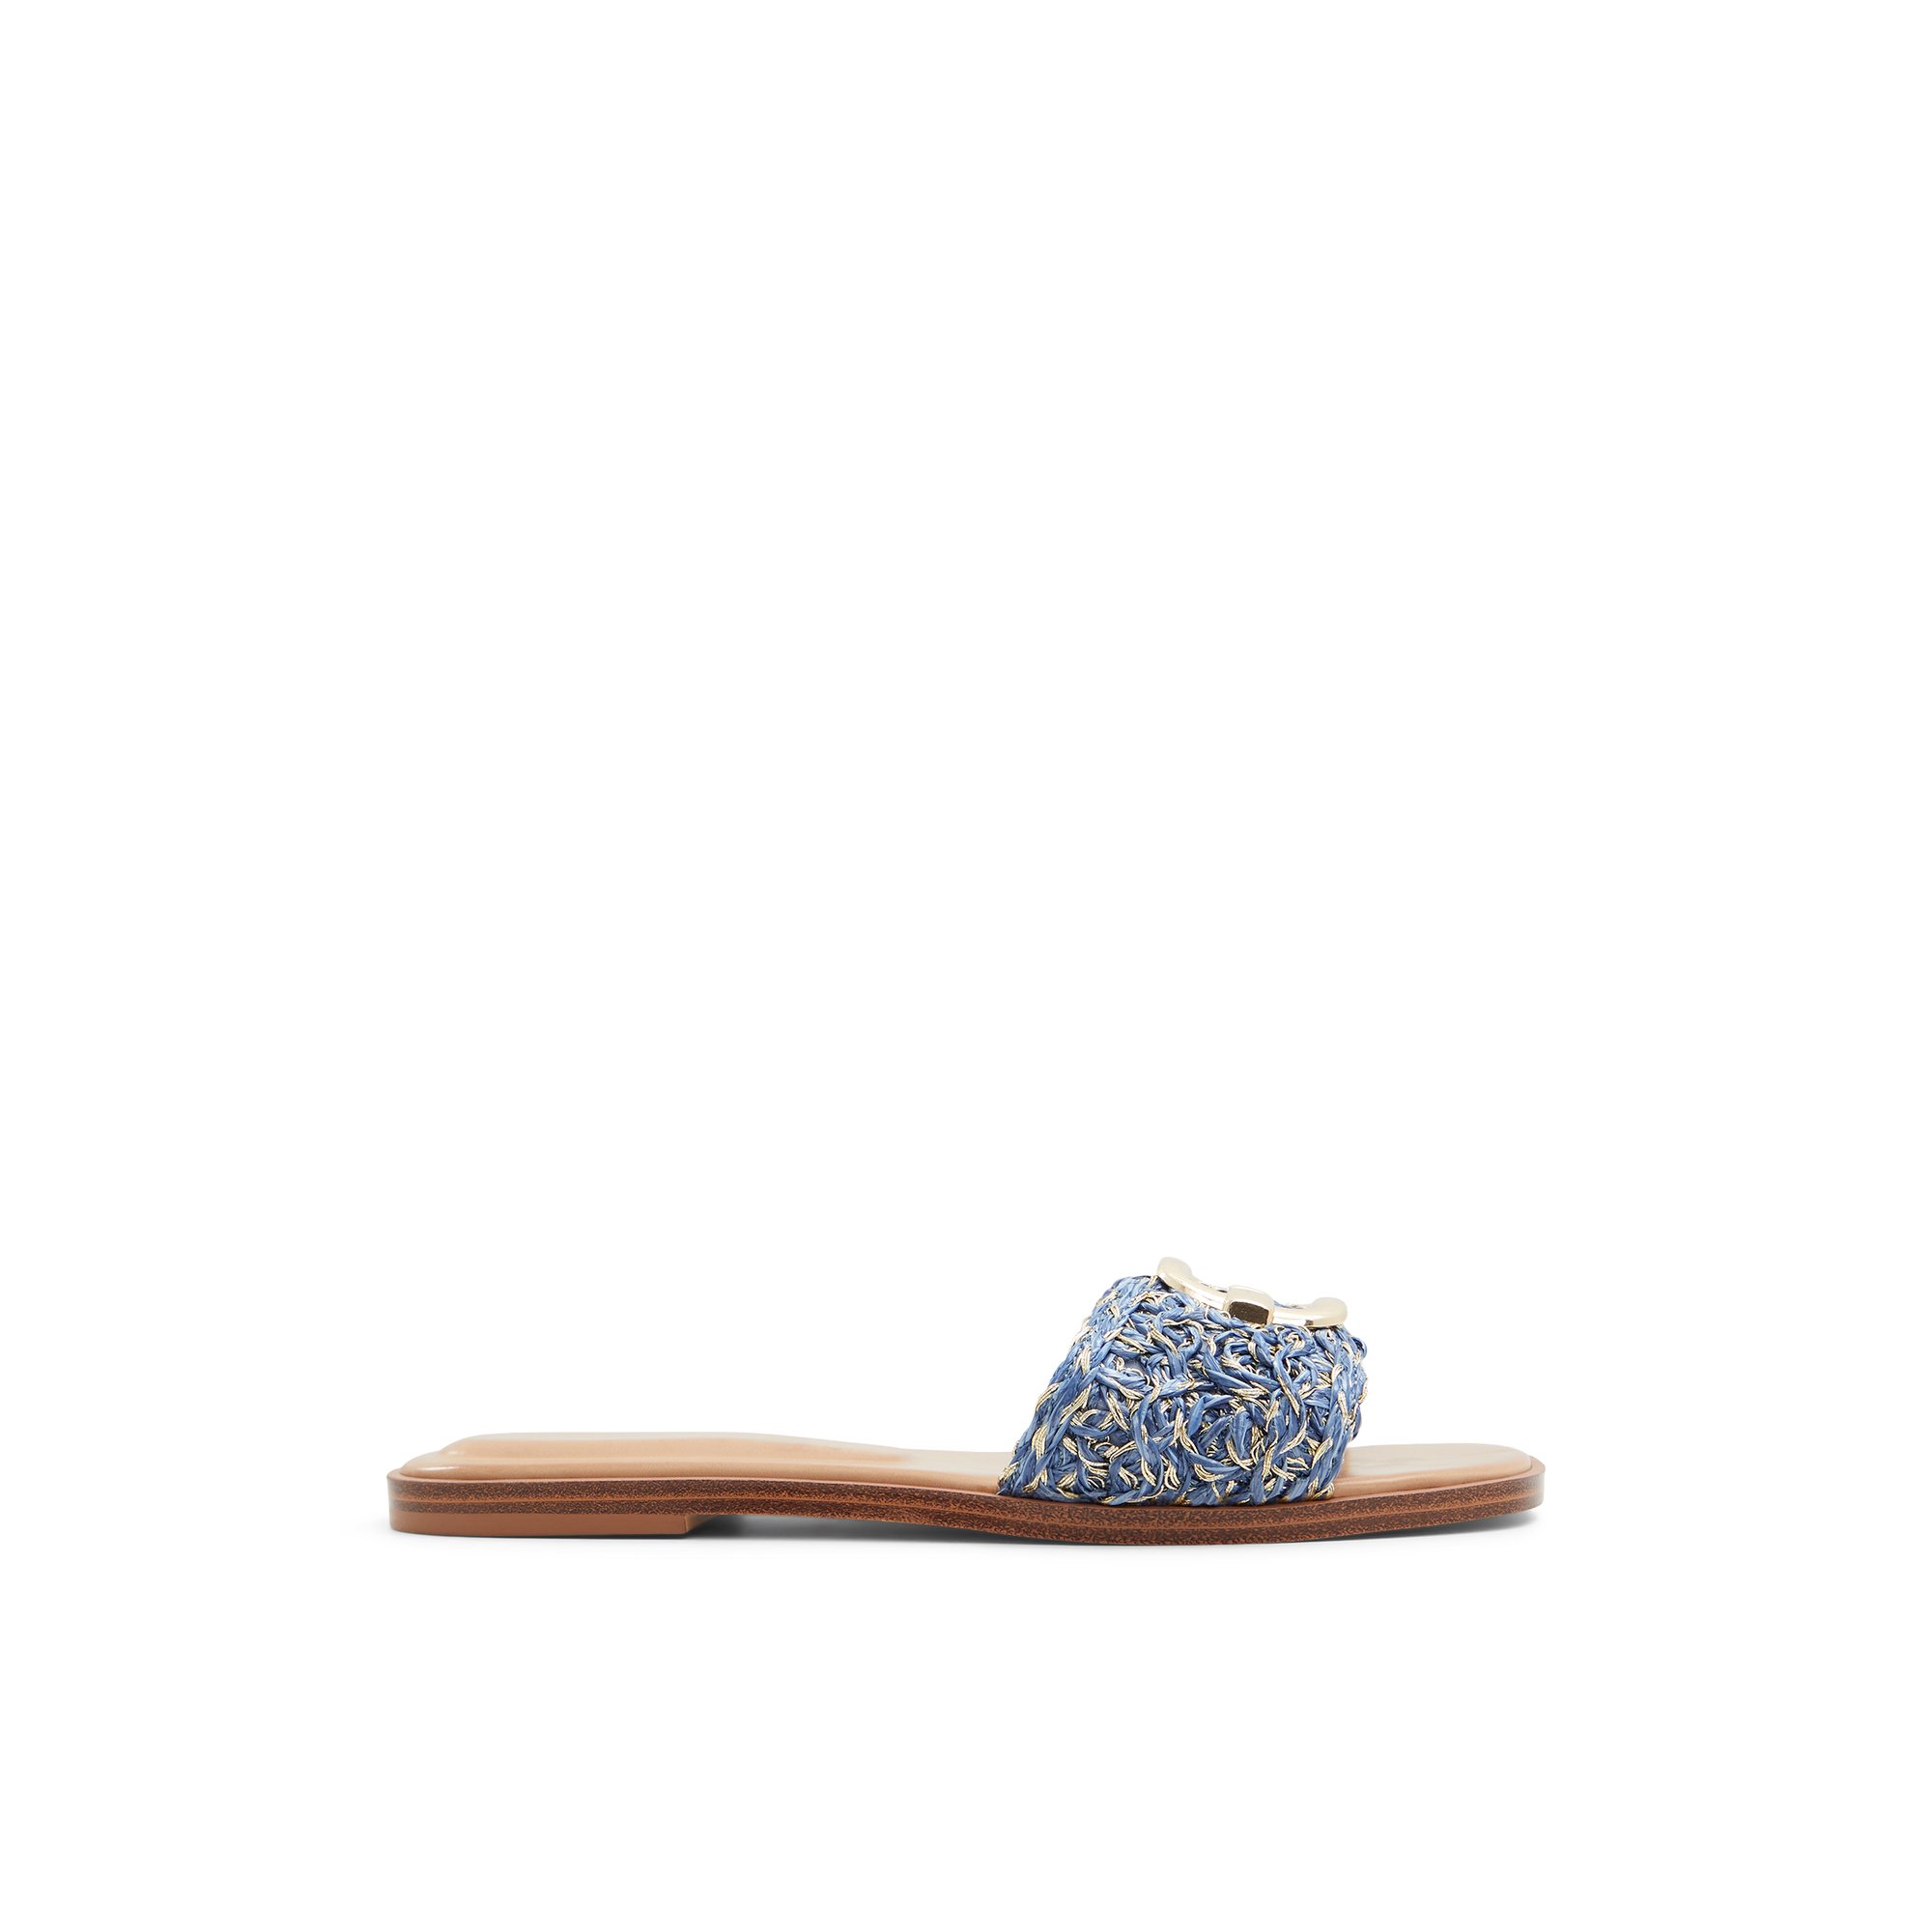 ALDO Glaeswen - Women's Sandals Flats - Blue